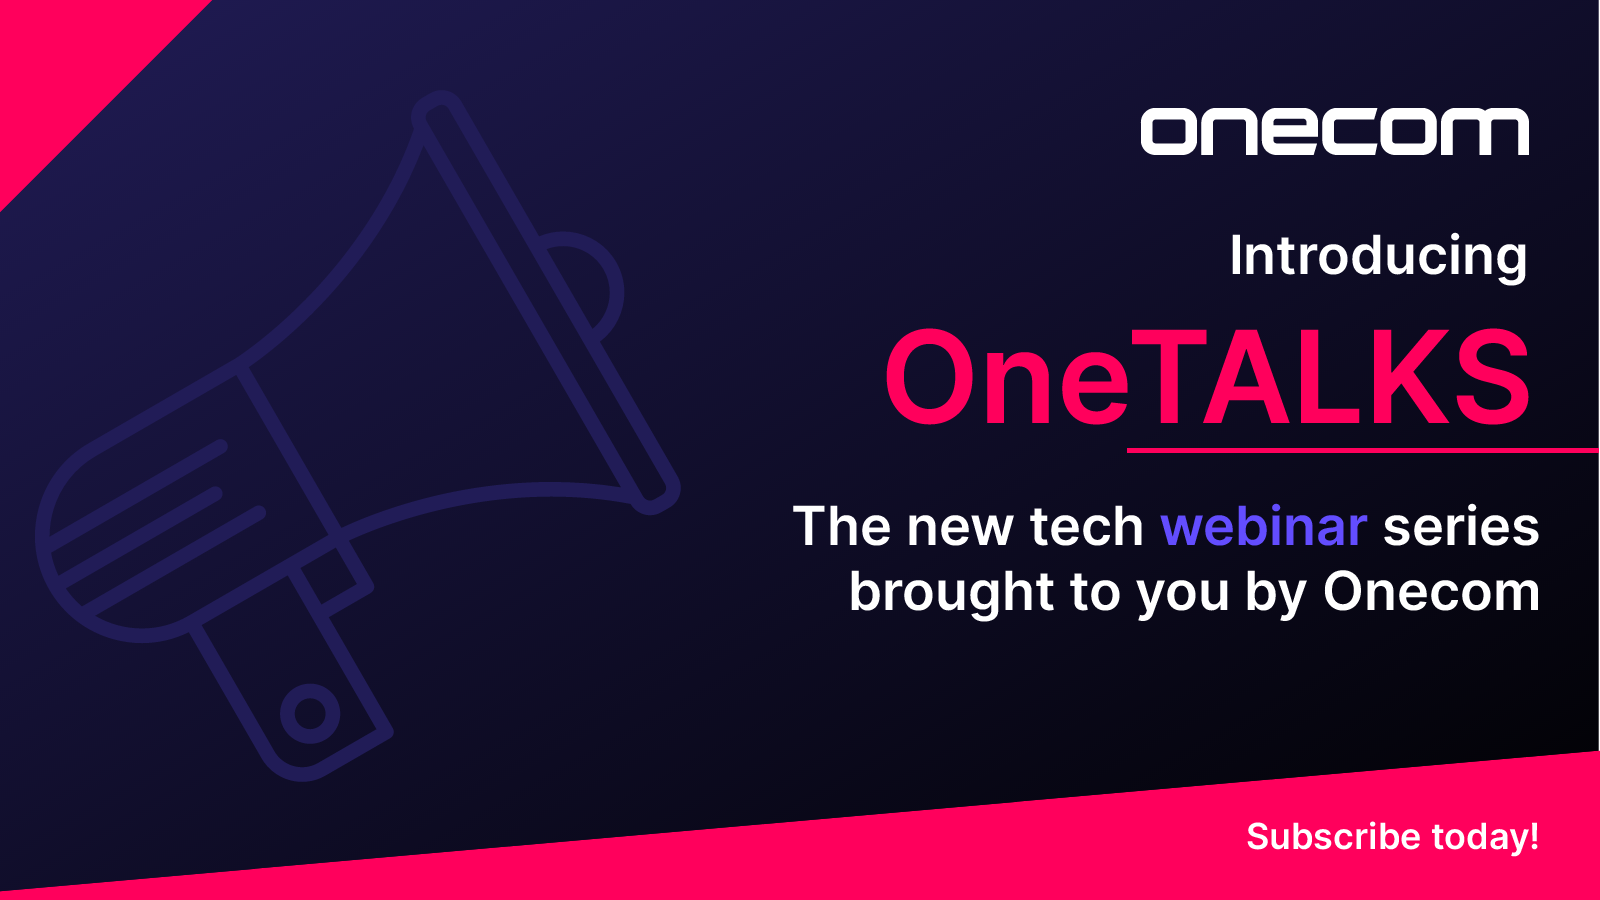 Introducing Onecom OneTALKS – a new series of webinars